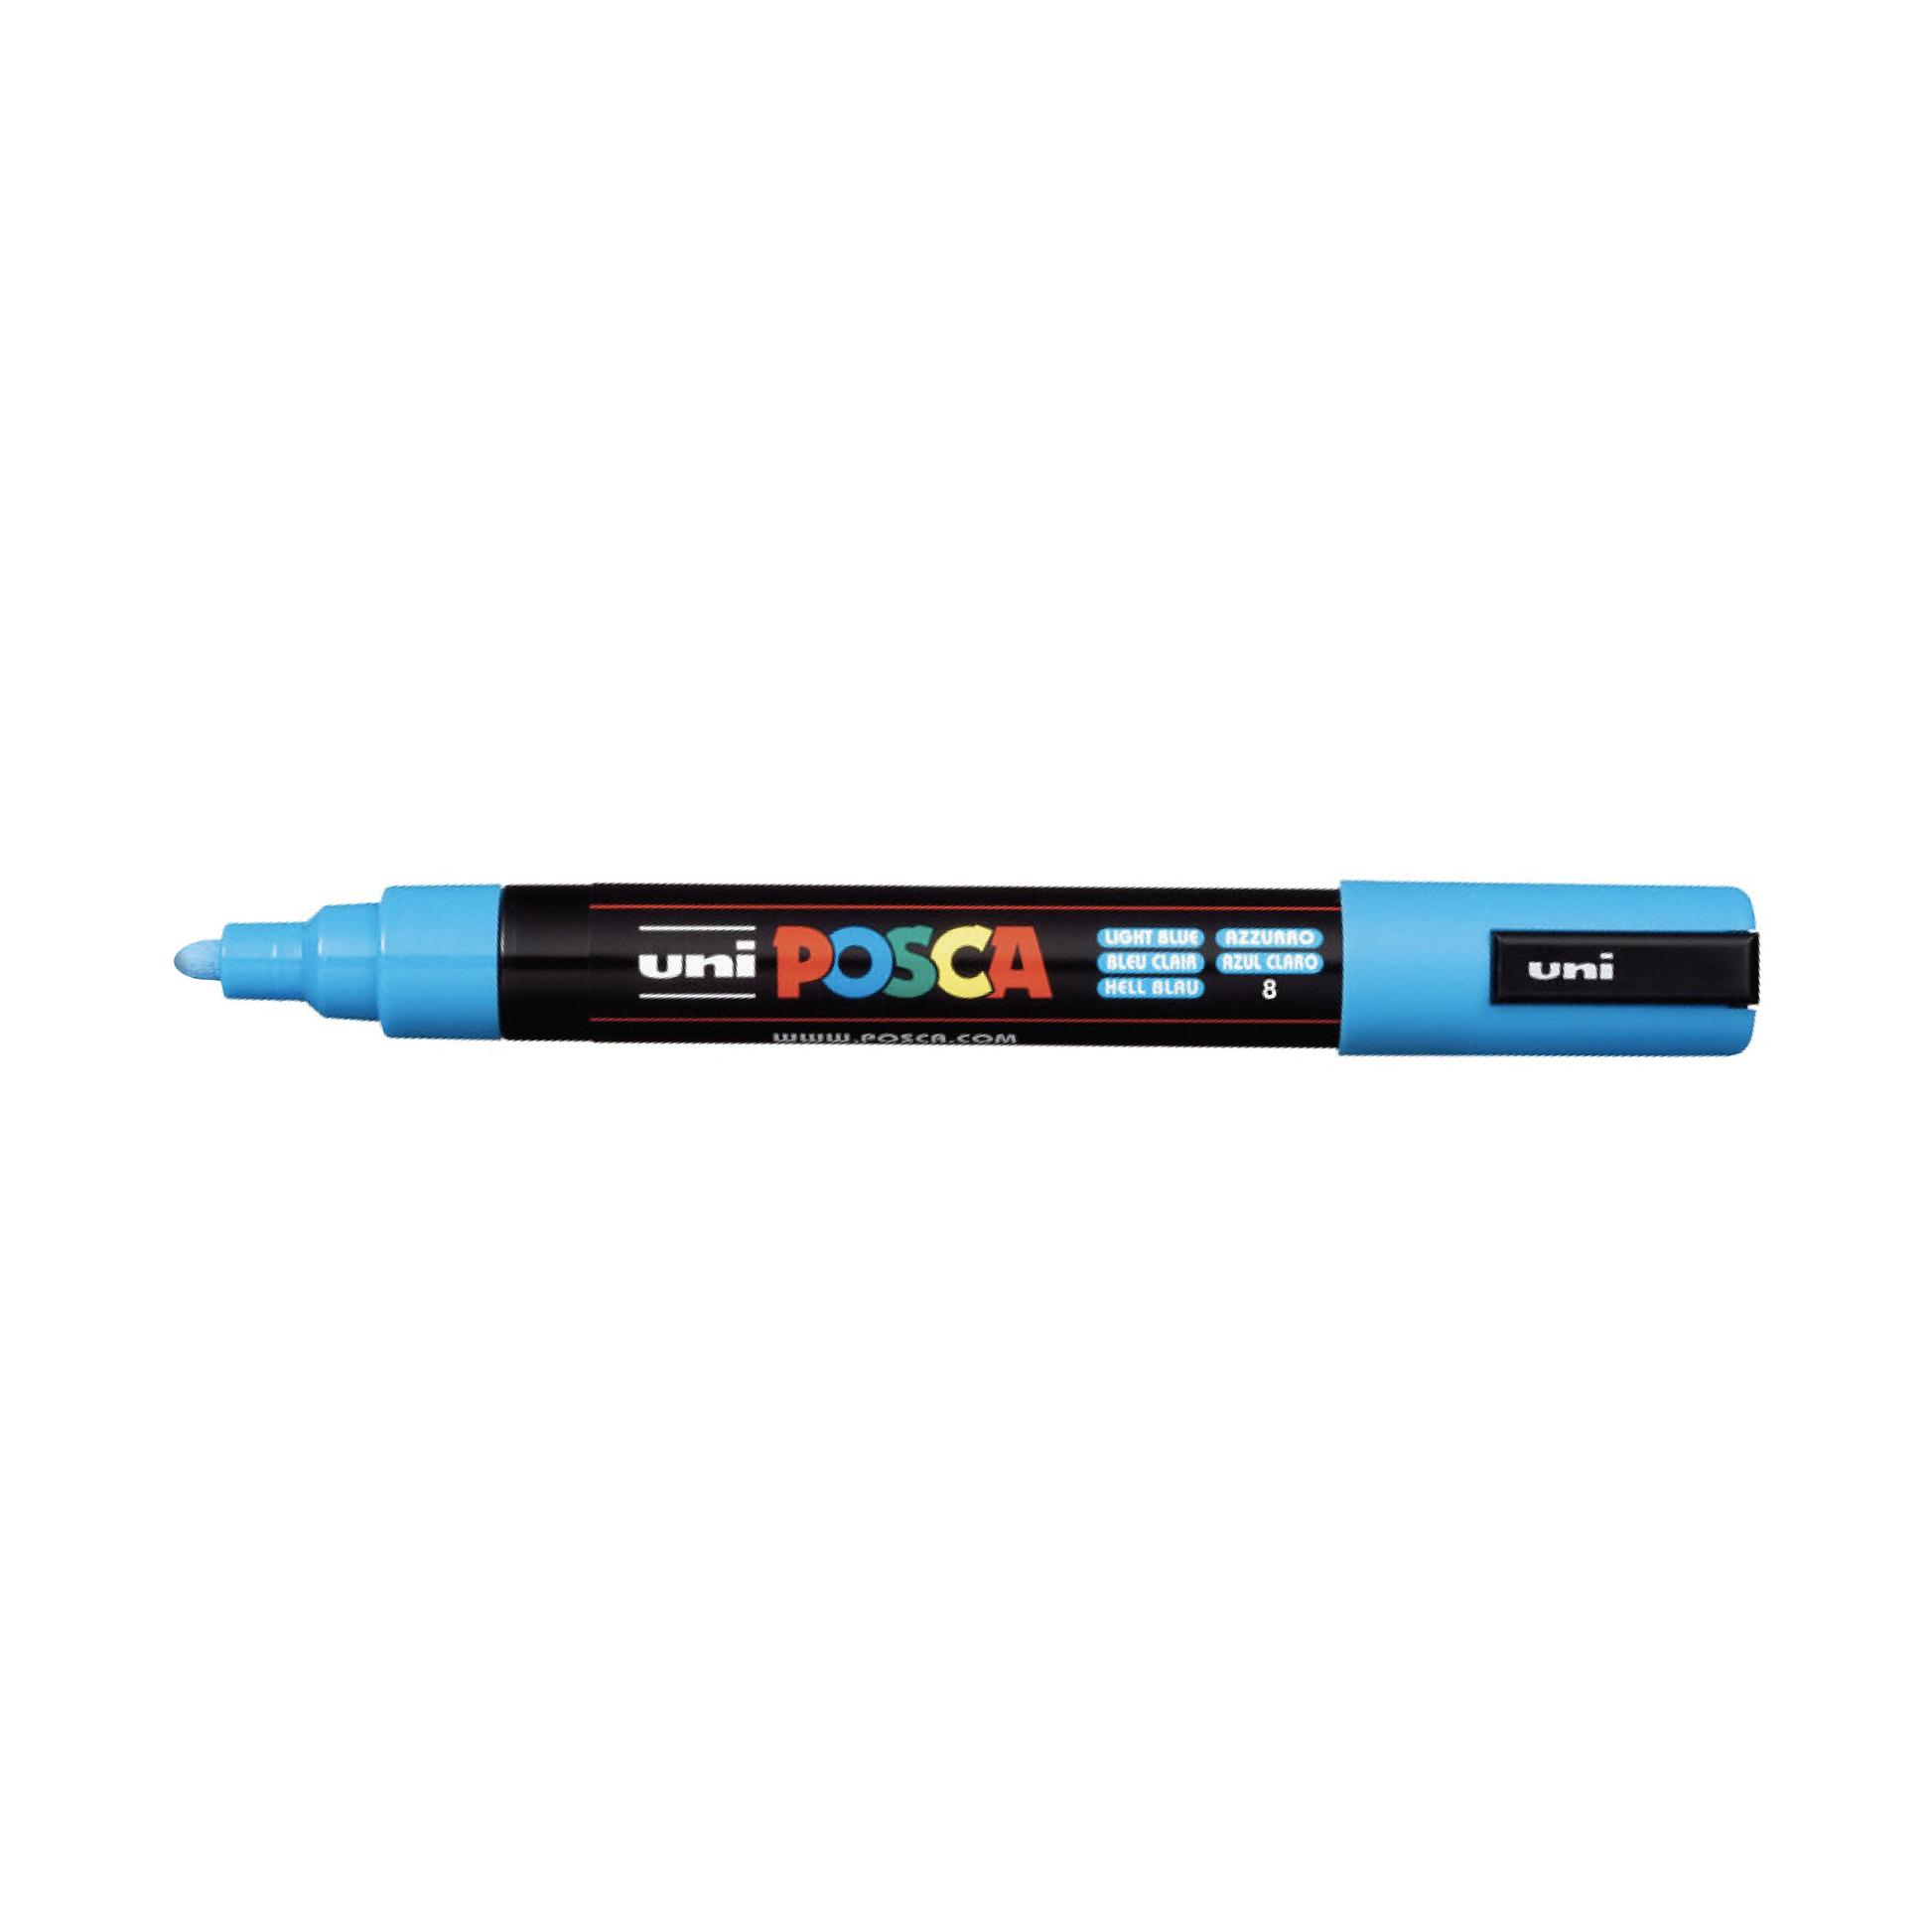 Uniball POSCA PC-5M Sky Blue Paint Marking Pen